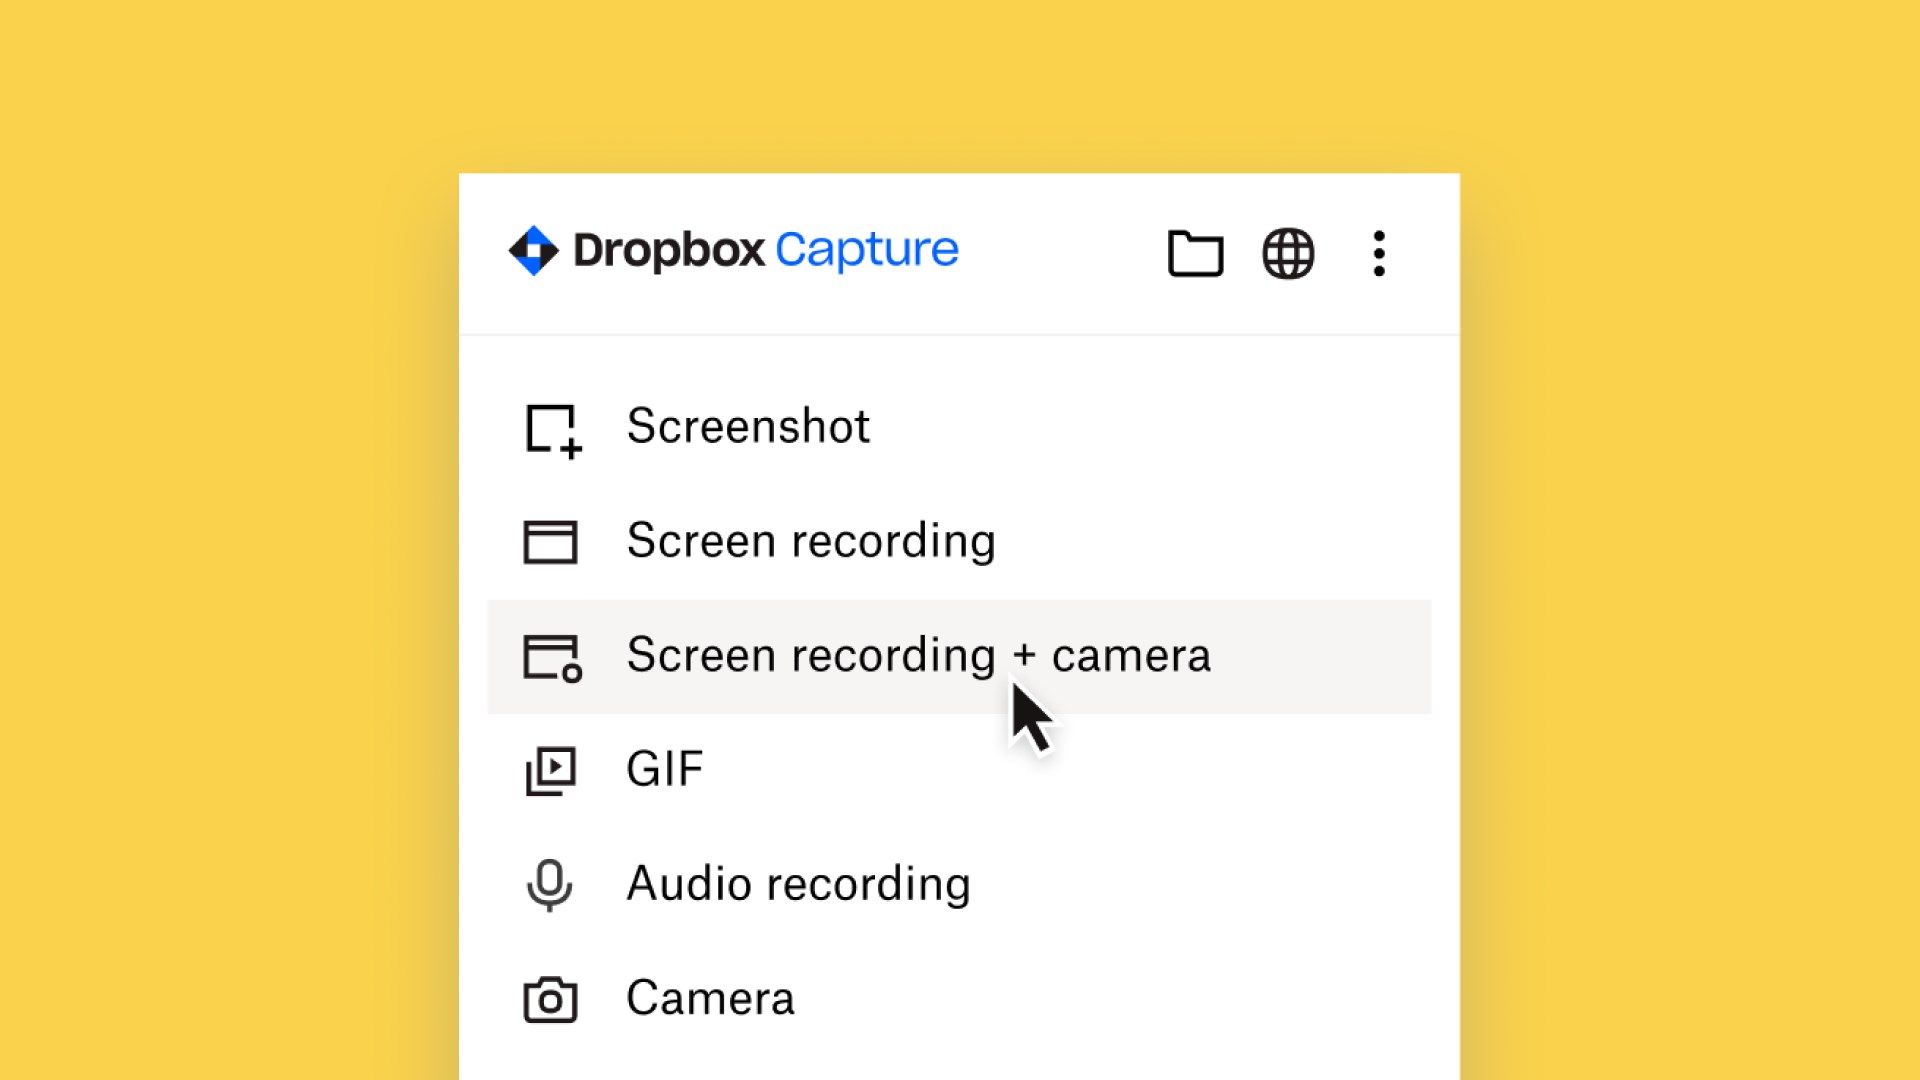 Dropbox Capture